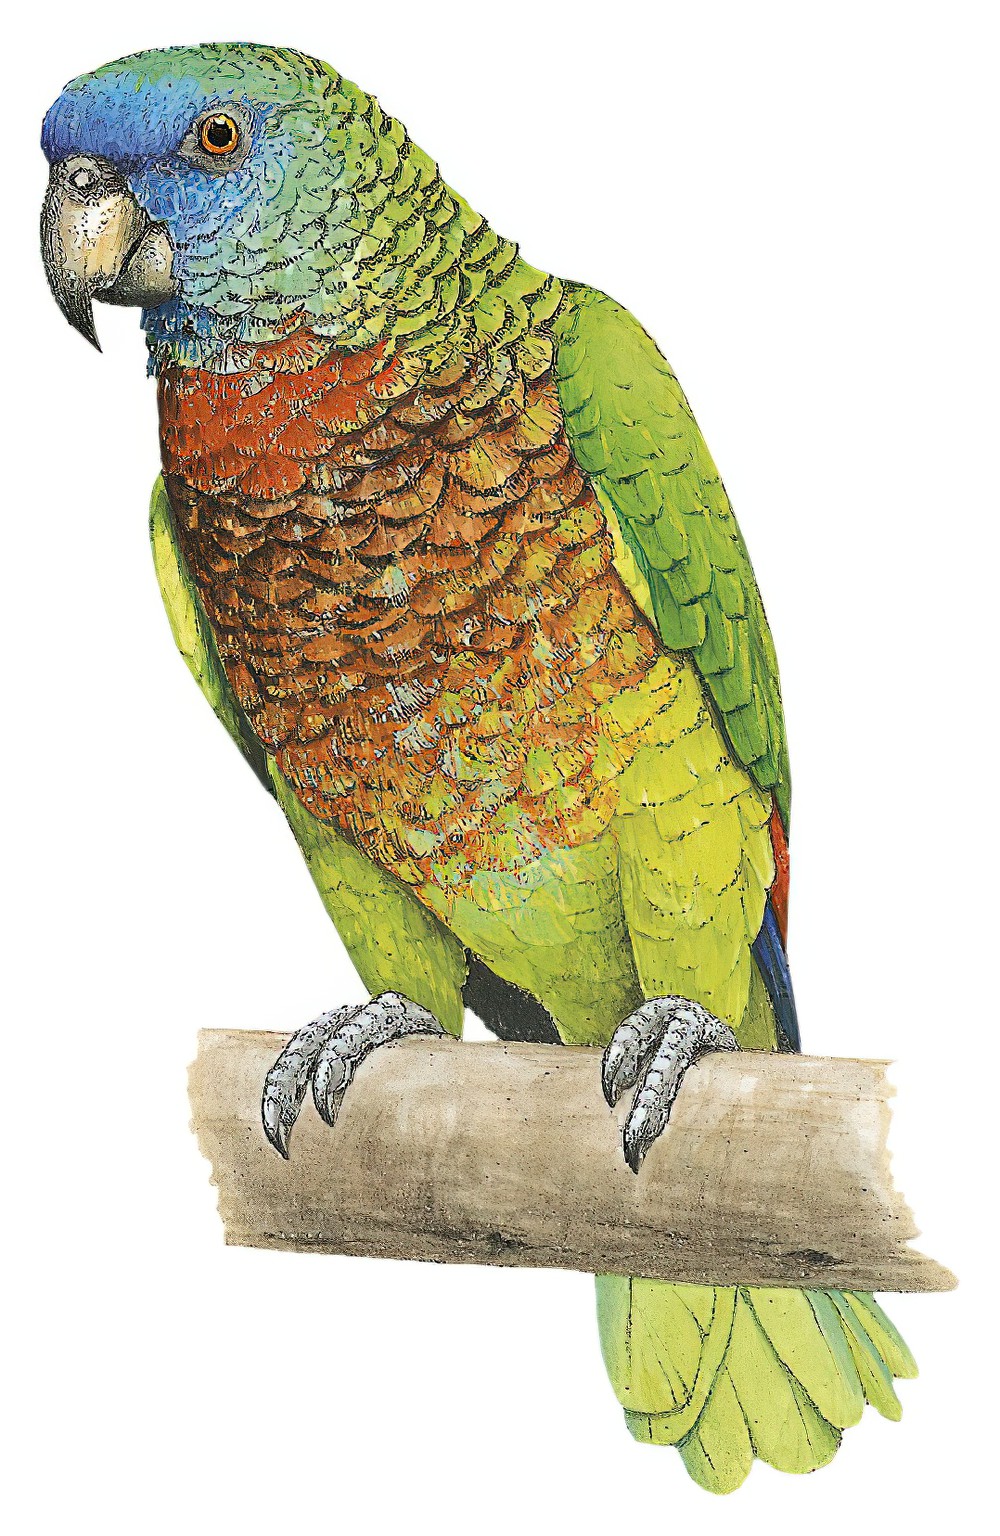 St. Lucia Parrot / Amazona versicolor